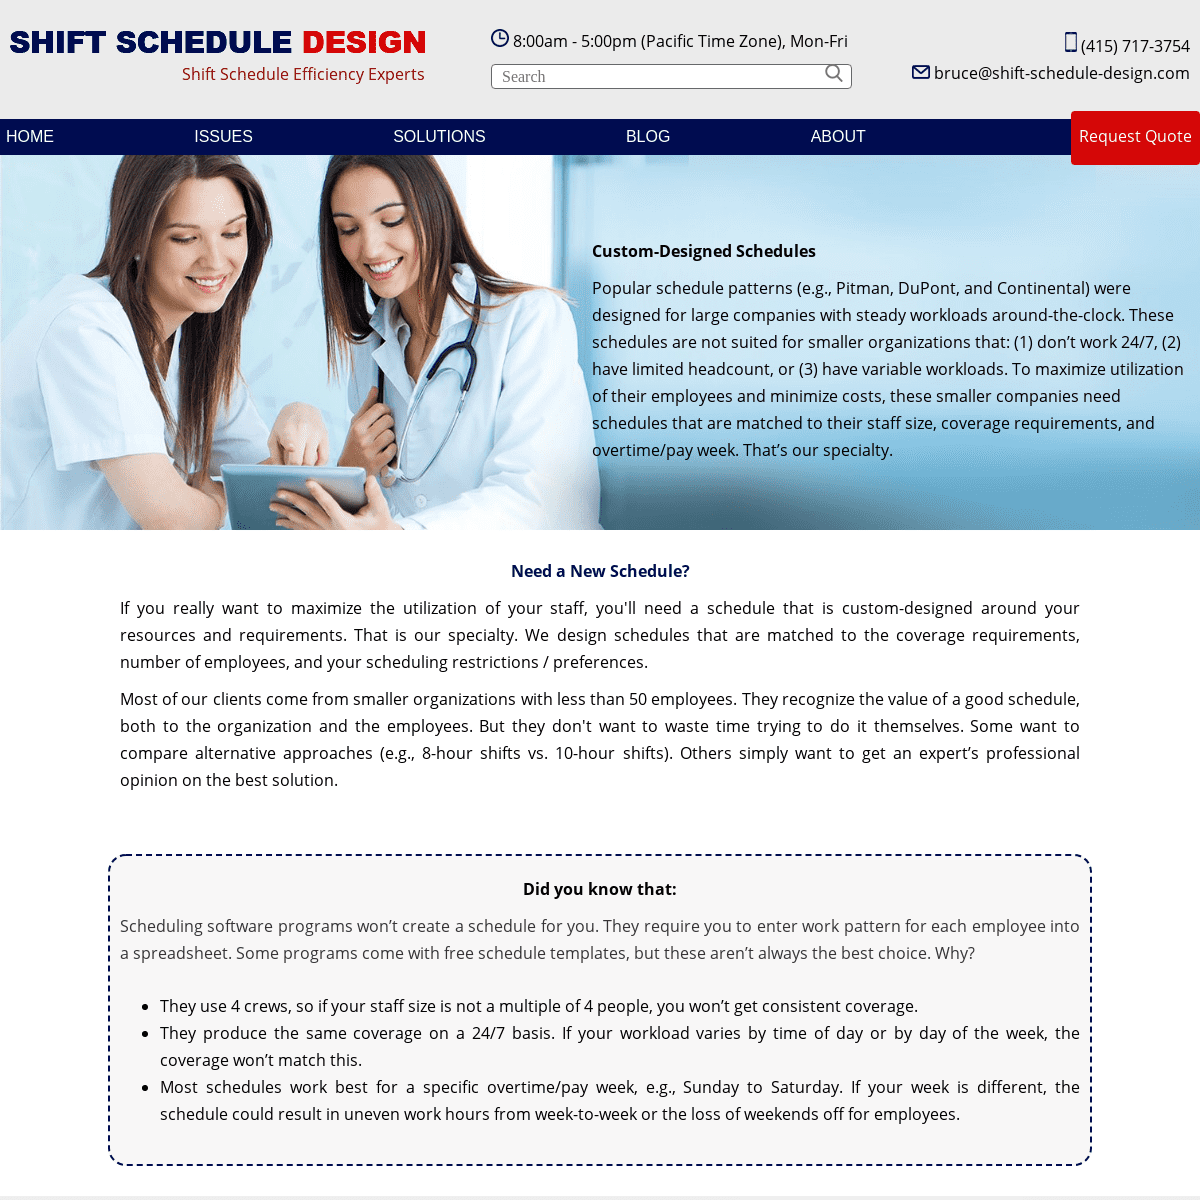 A complete backup of shift-schedule-design.com